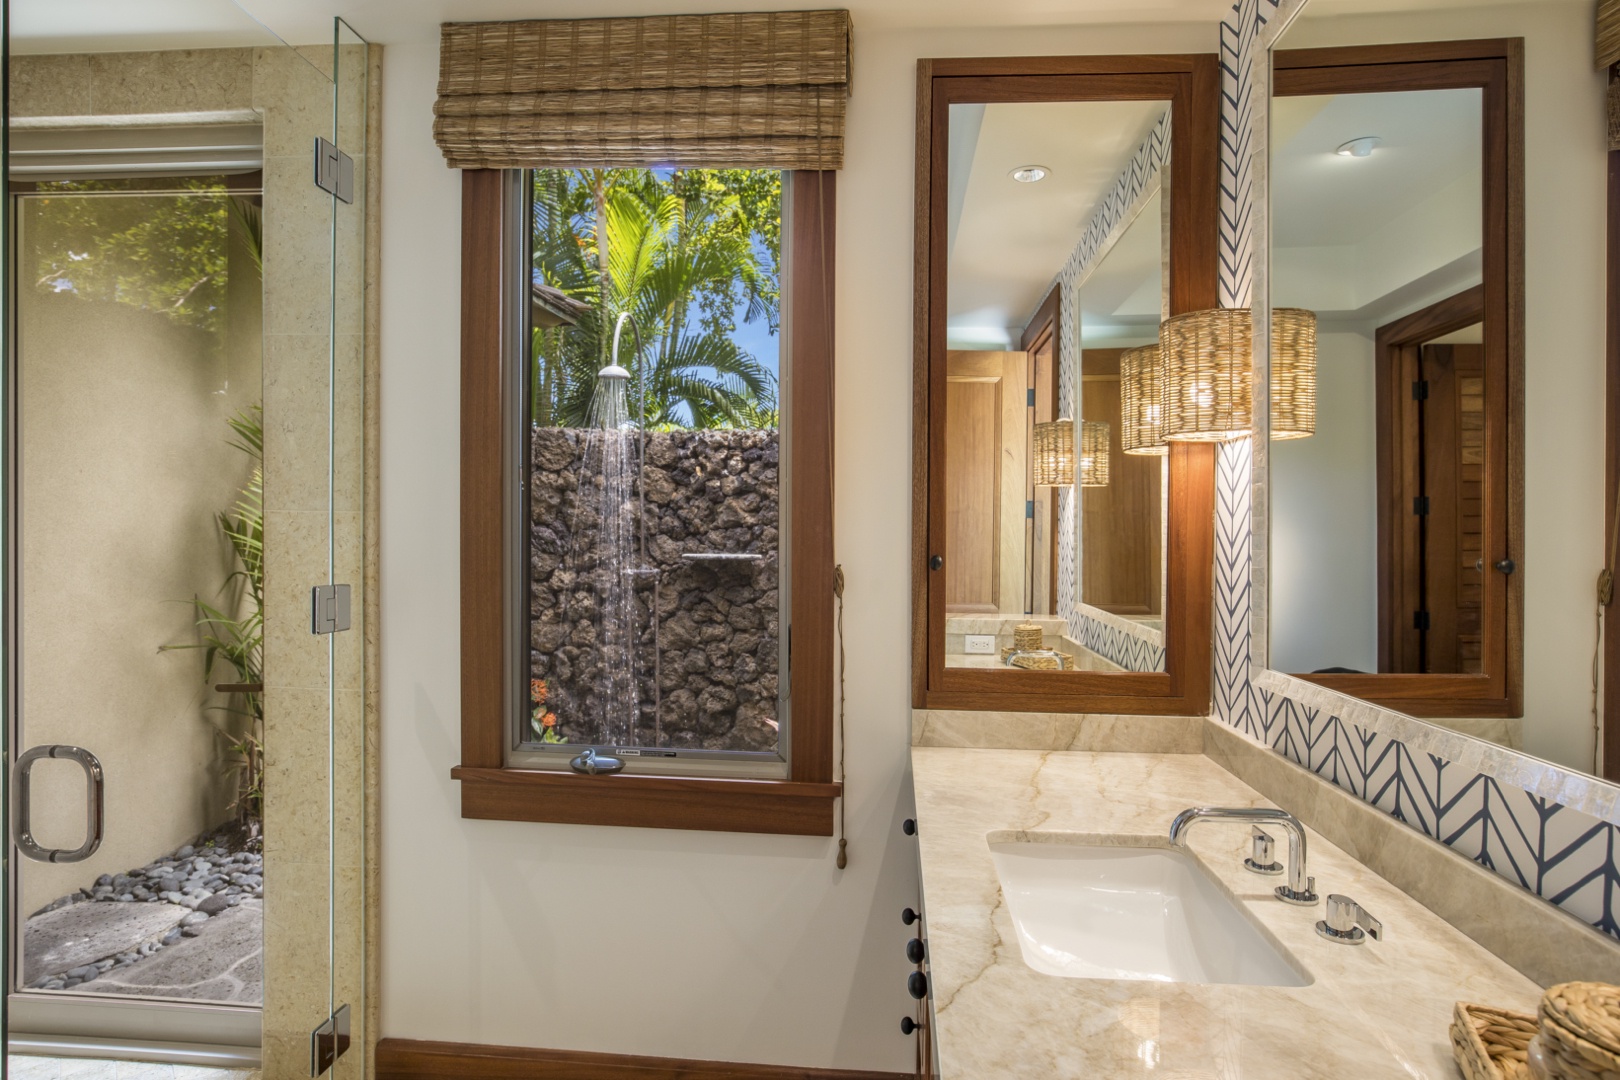 Kailua Kona Vacation Rentals, 4BD Kahikole Street (218) Estate Home at Four Seasons Resort at Hualalai - The en suite bath includes a glass-enclosed shower & an exterior garden shower